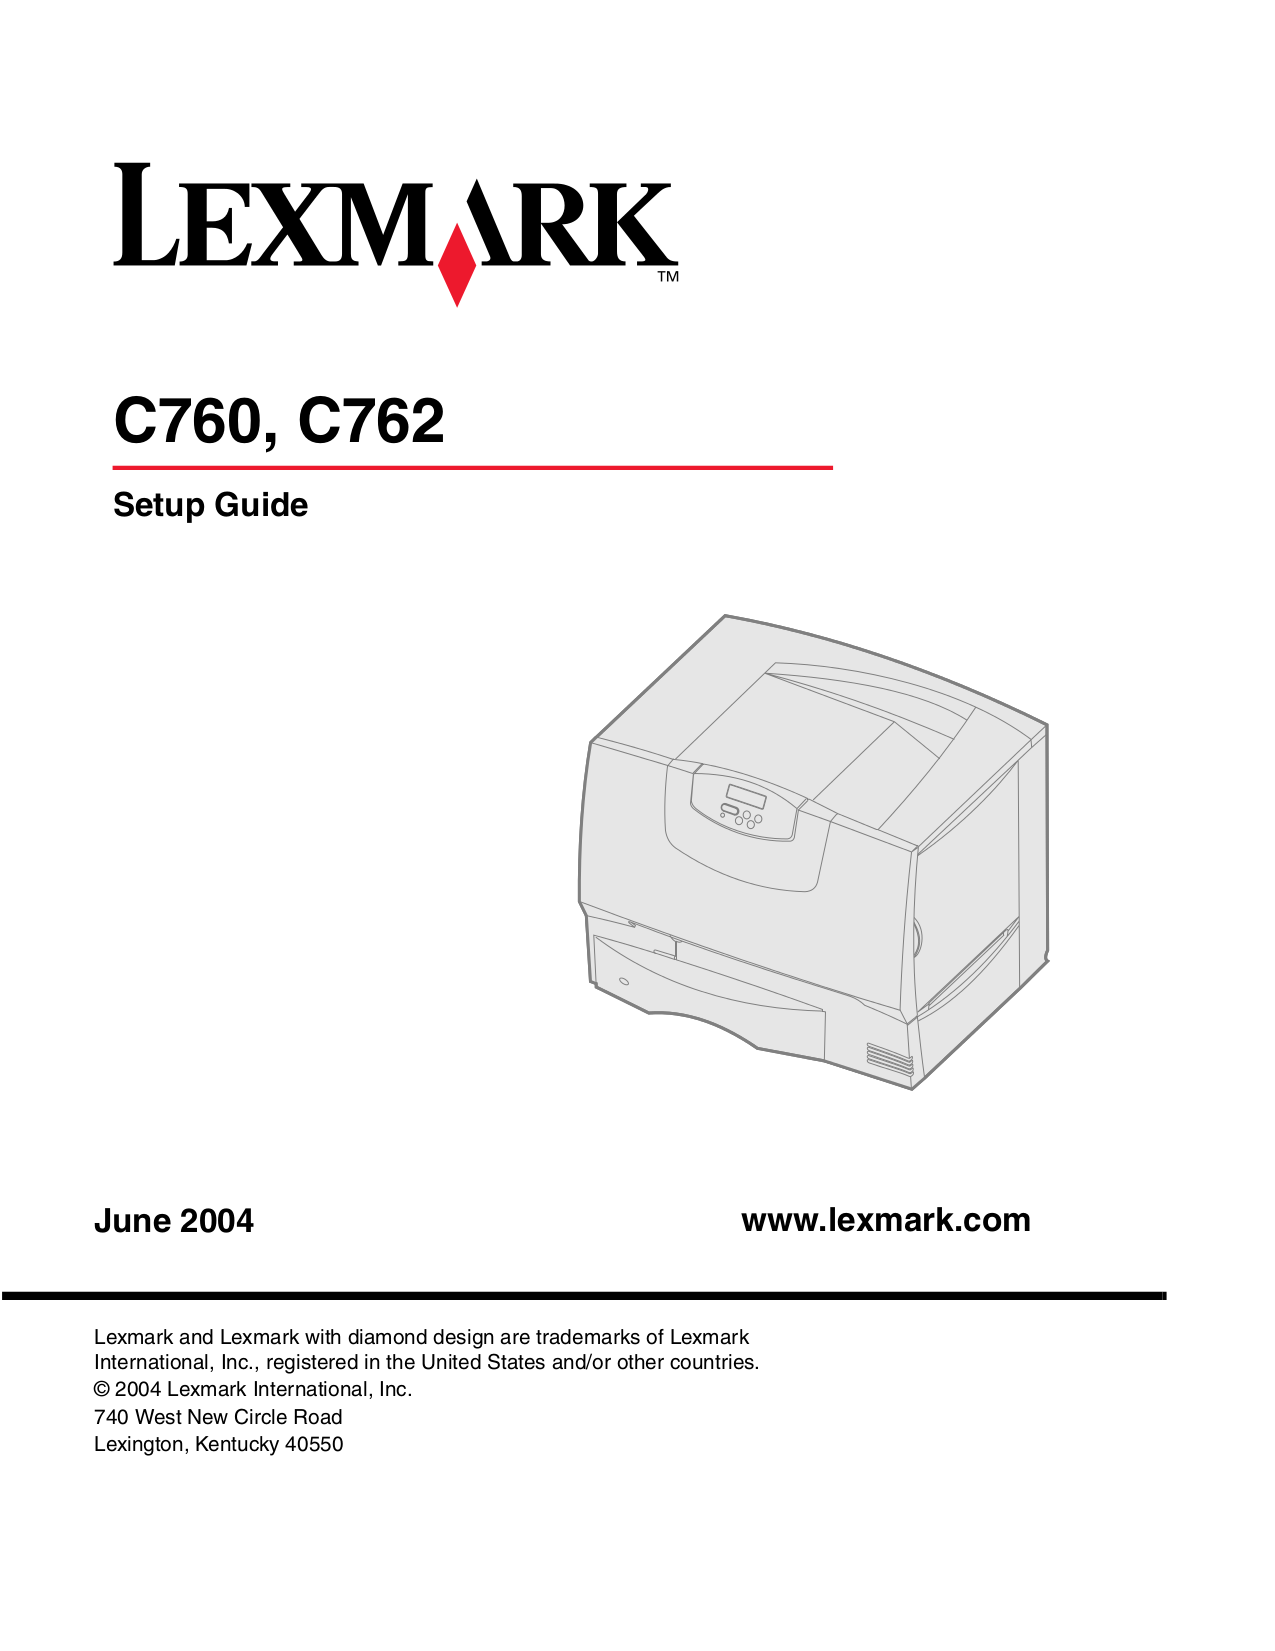 Lexmark Printer P915 Driver Download